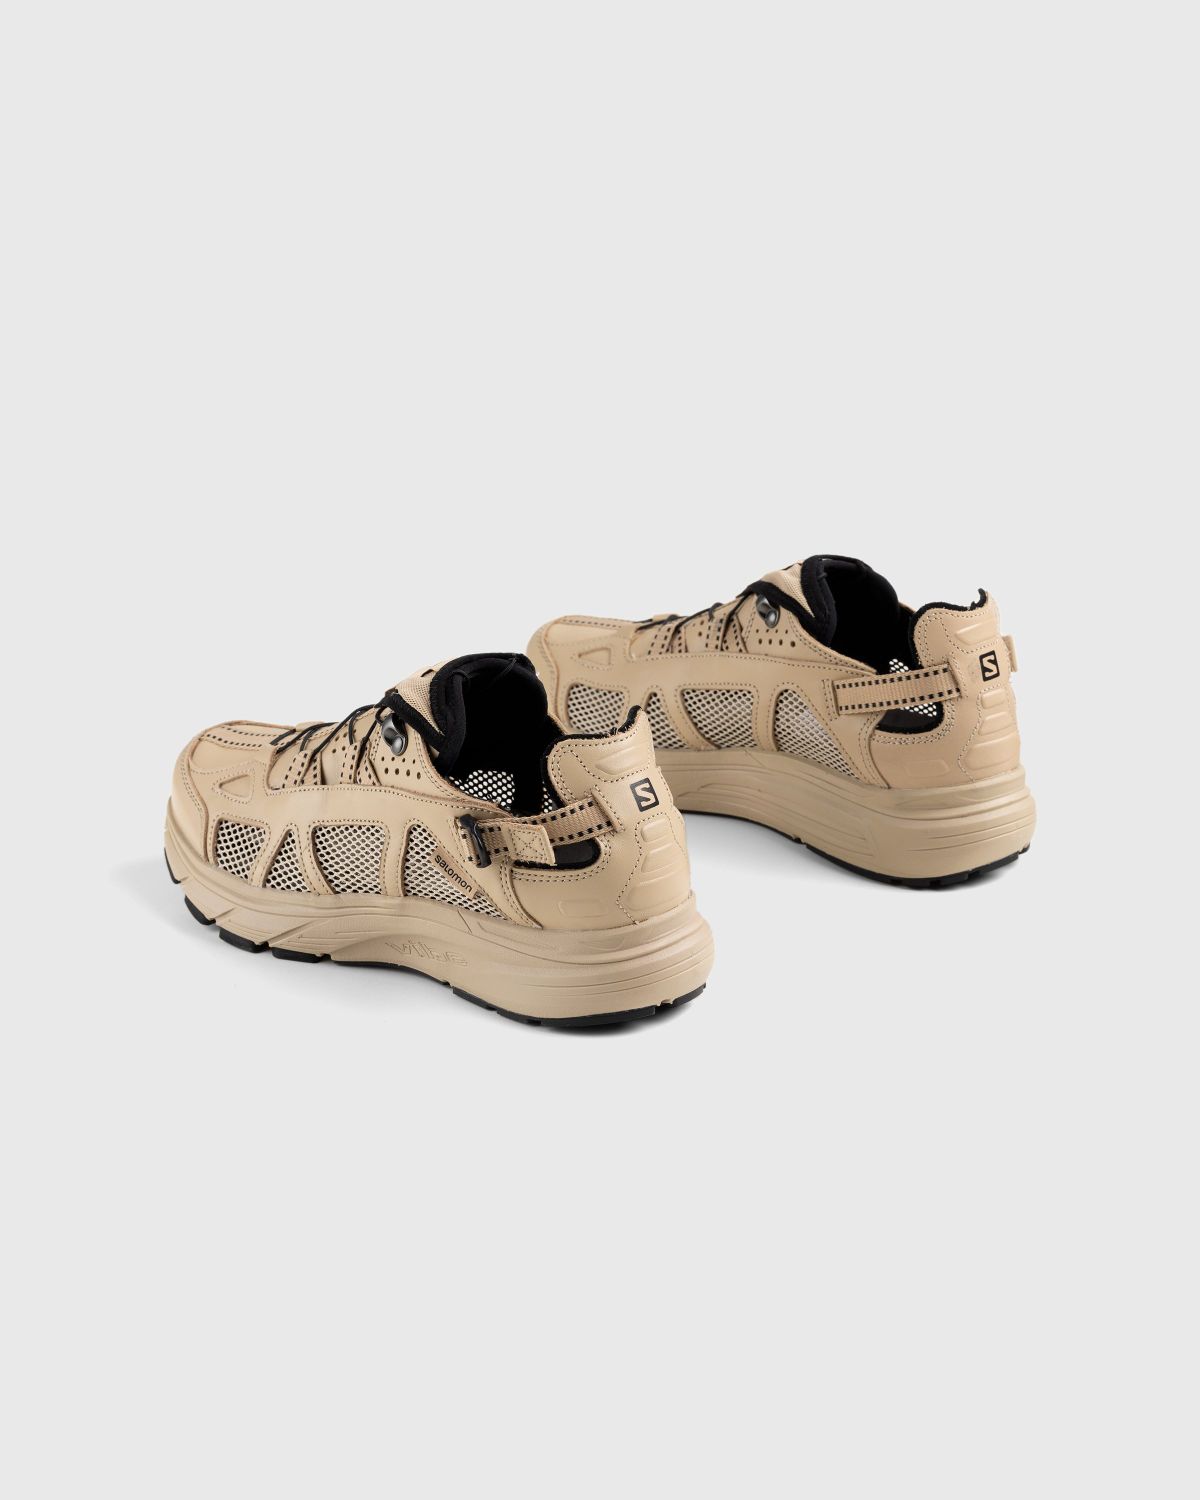 Salomon – Techsonic Leather Advanced Safari/Safari/Black - Low Top Sneakers - Beige - Image 4